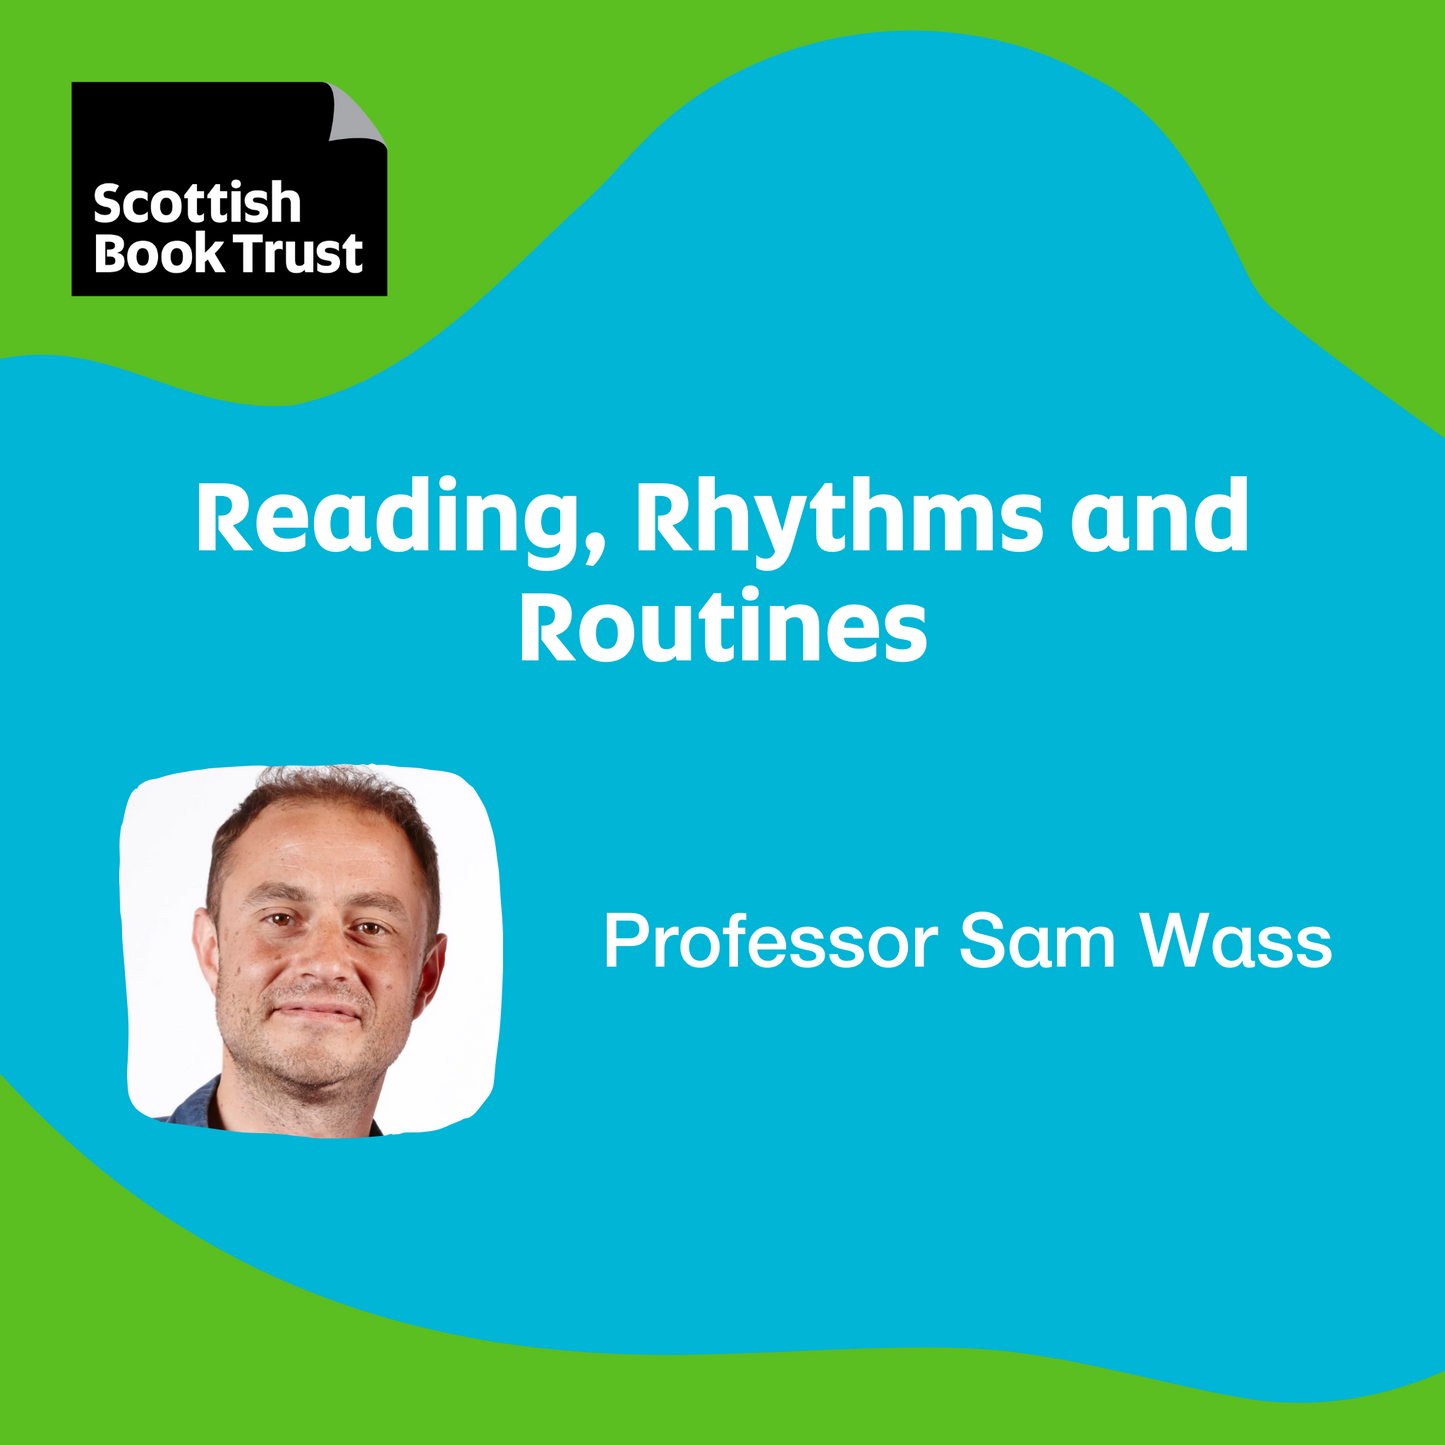 Webinar - Reading, rhythms and routines